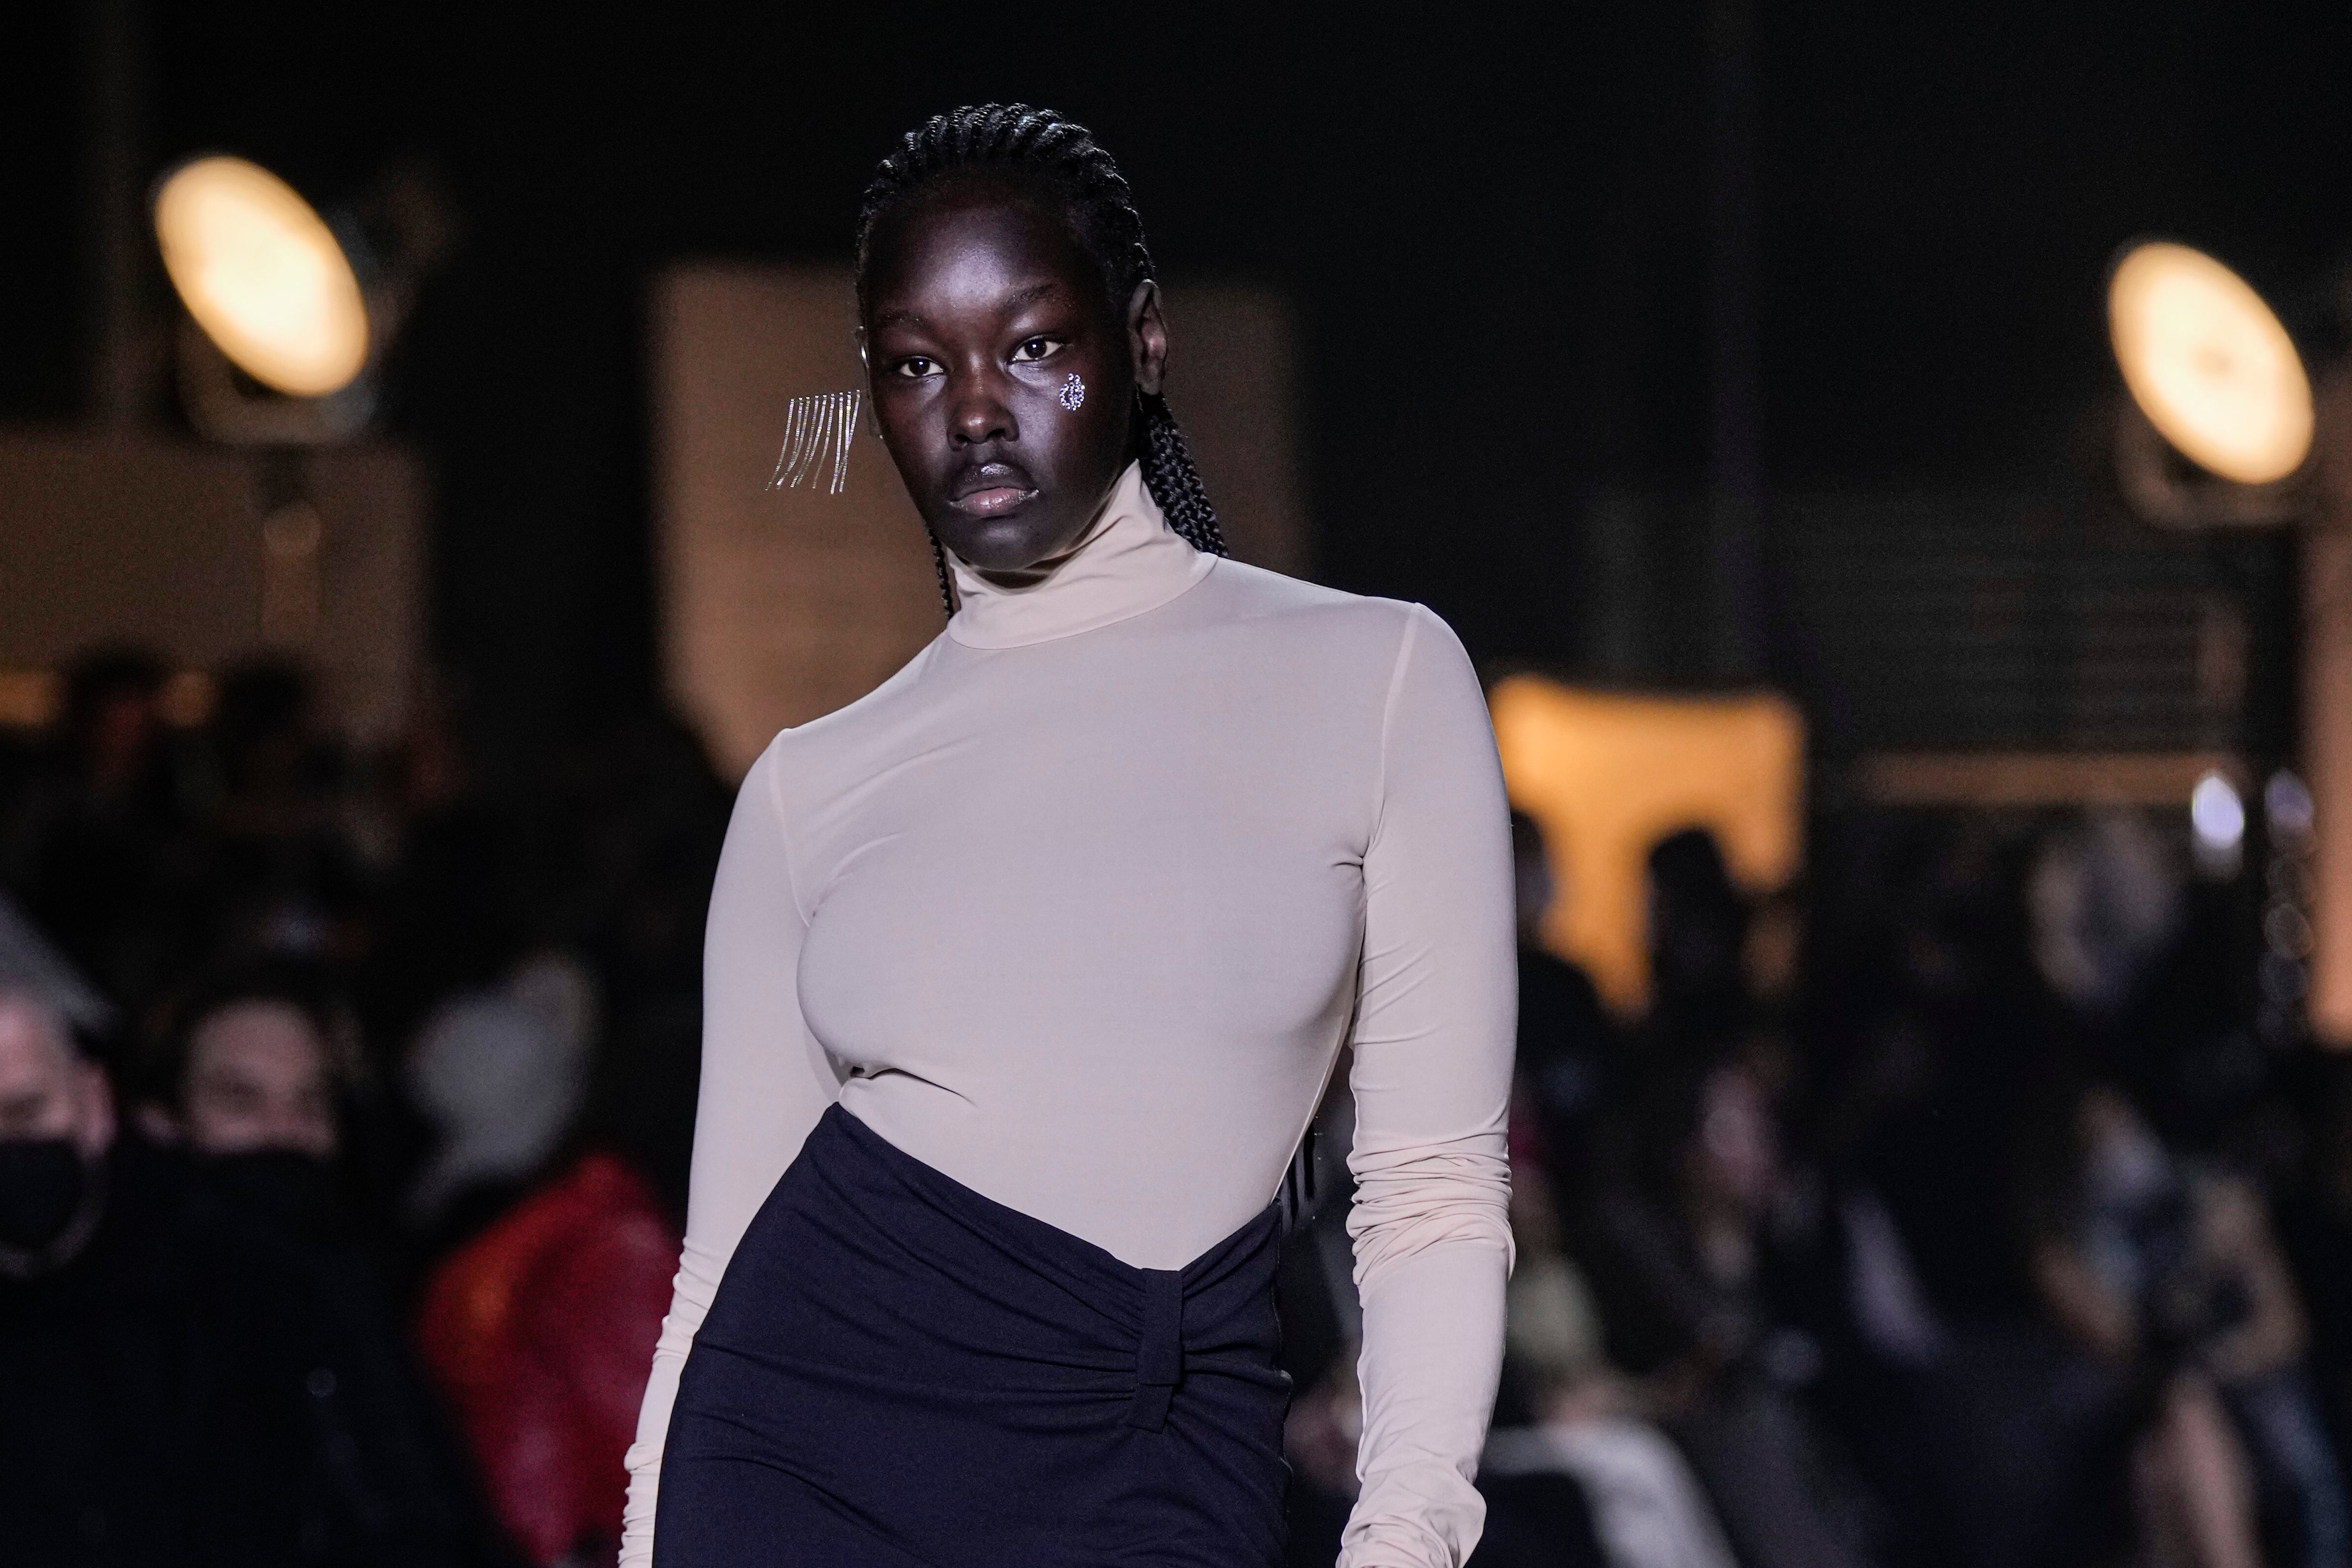 Milan Fashion Week opens with chiffon and tweed at Fendi